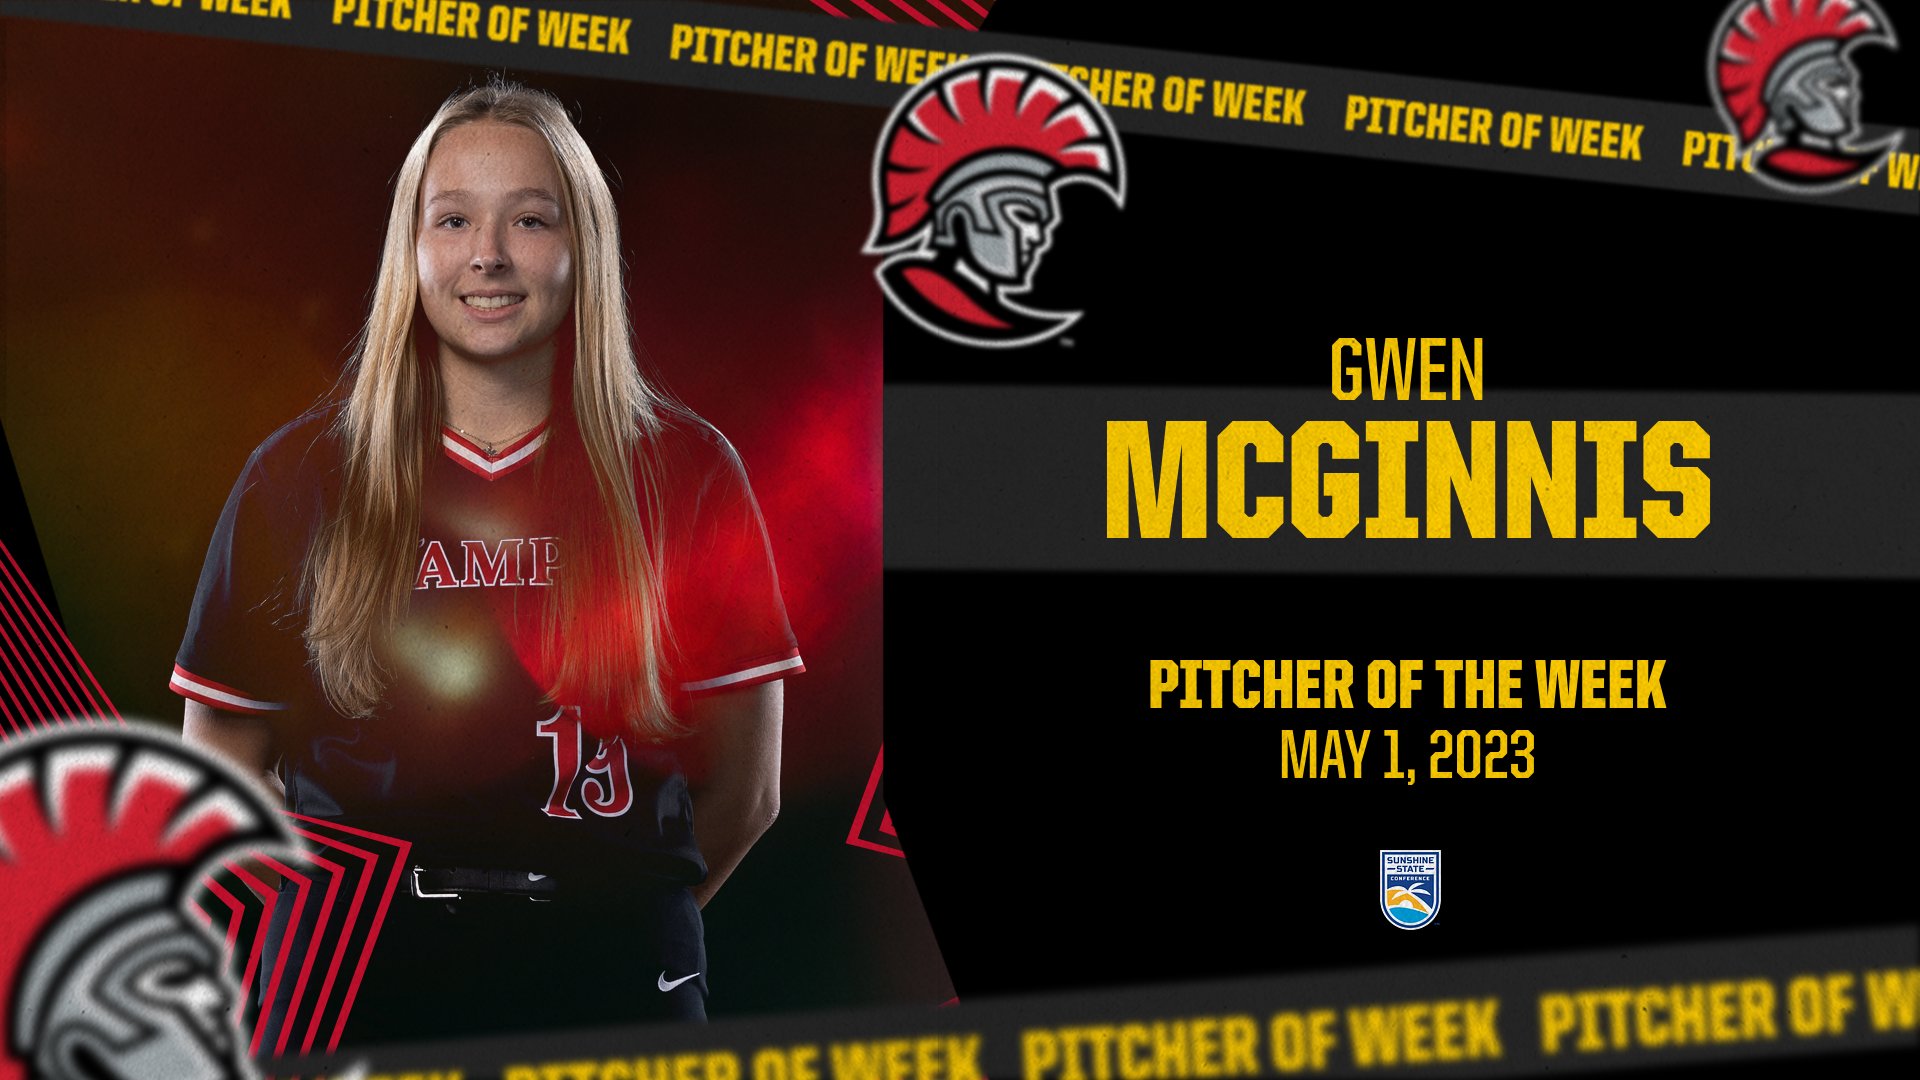 SSC Pitcher of the Week Gwen McGinnis